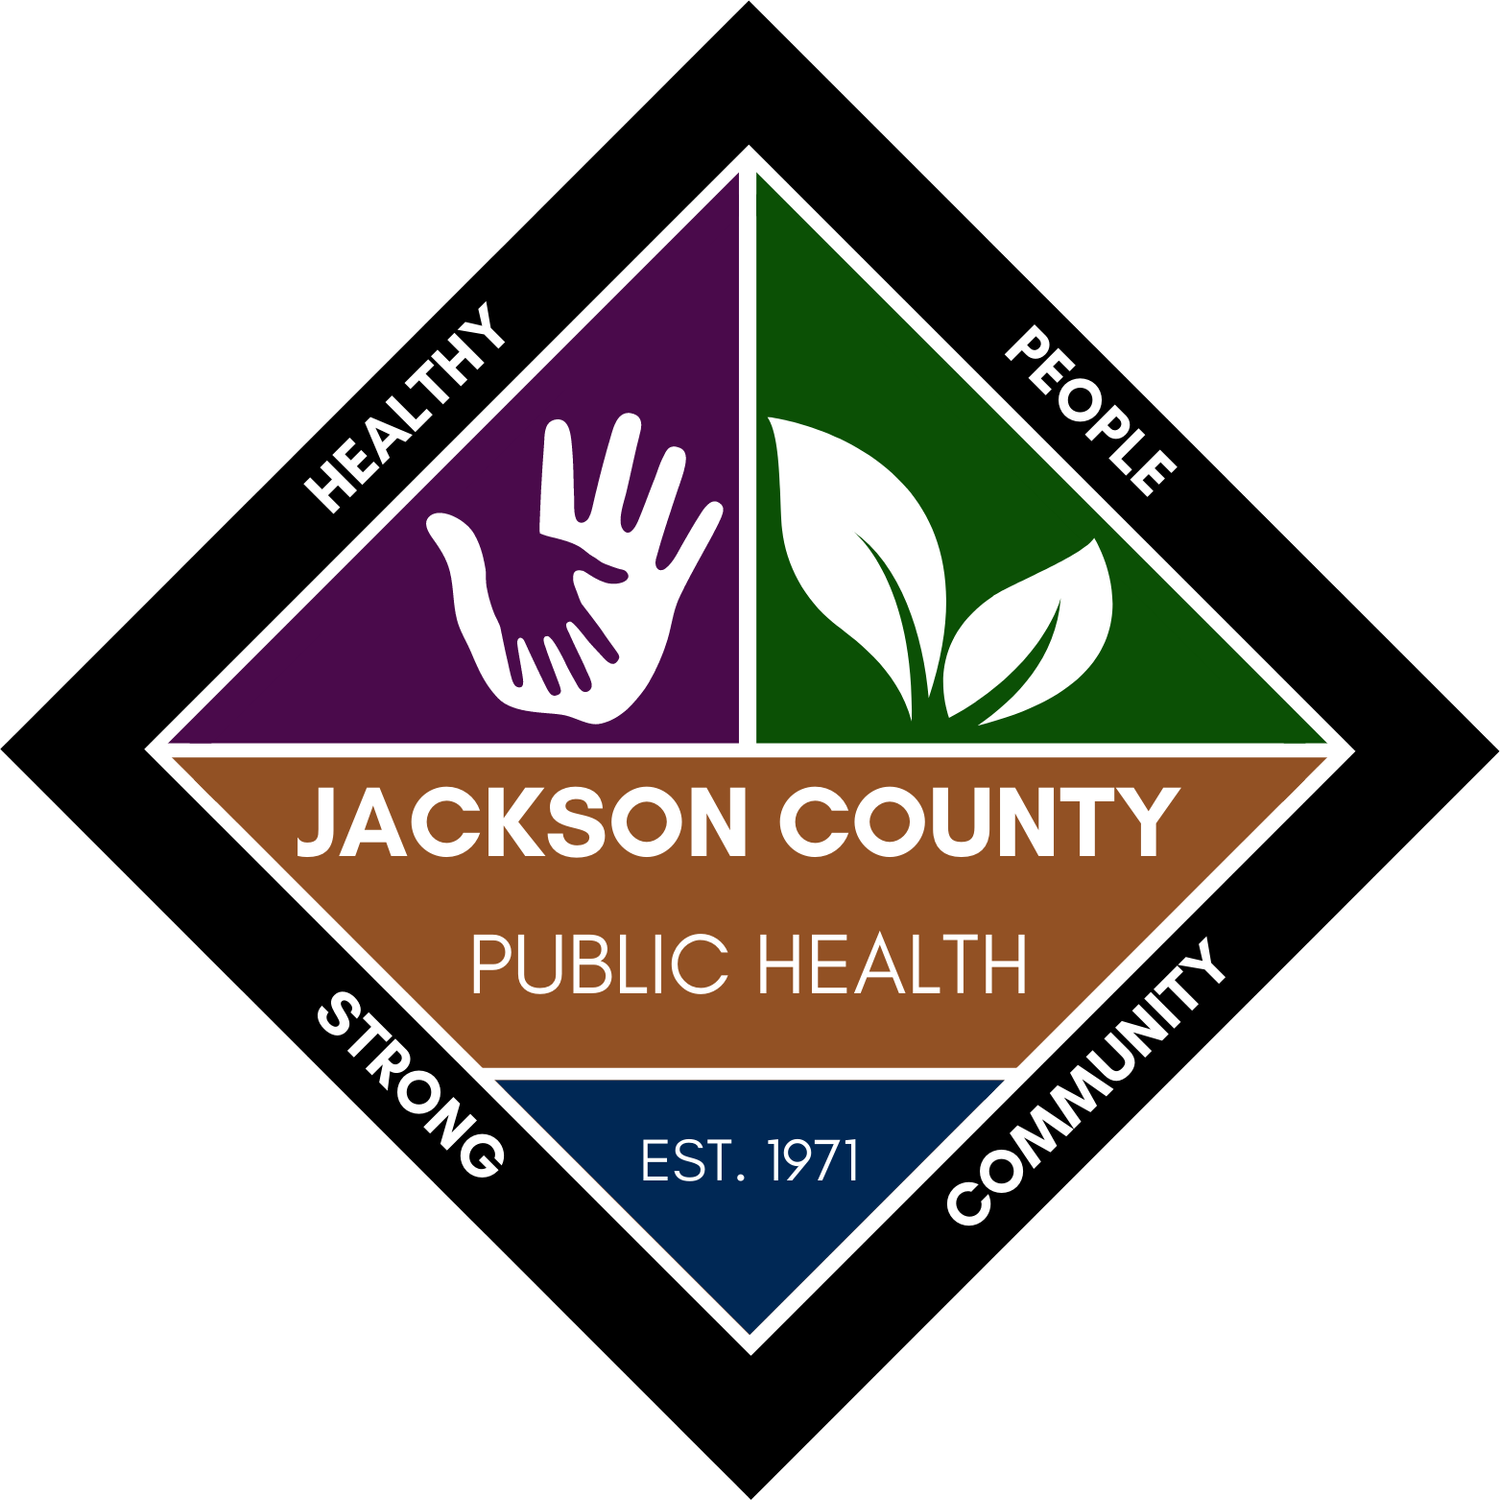 Jackson County Public Health Department